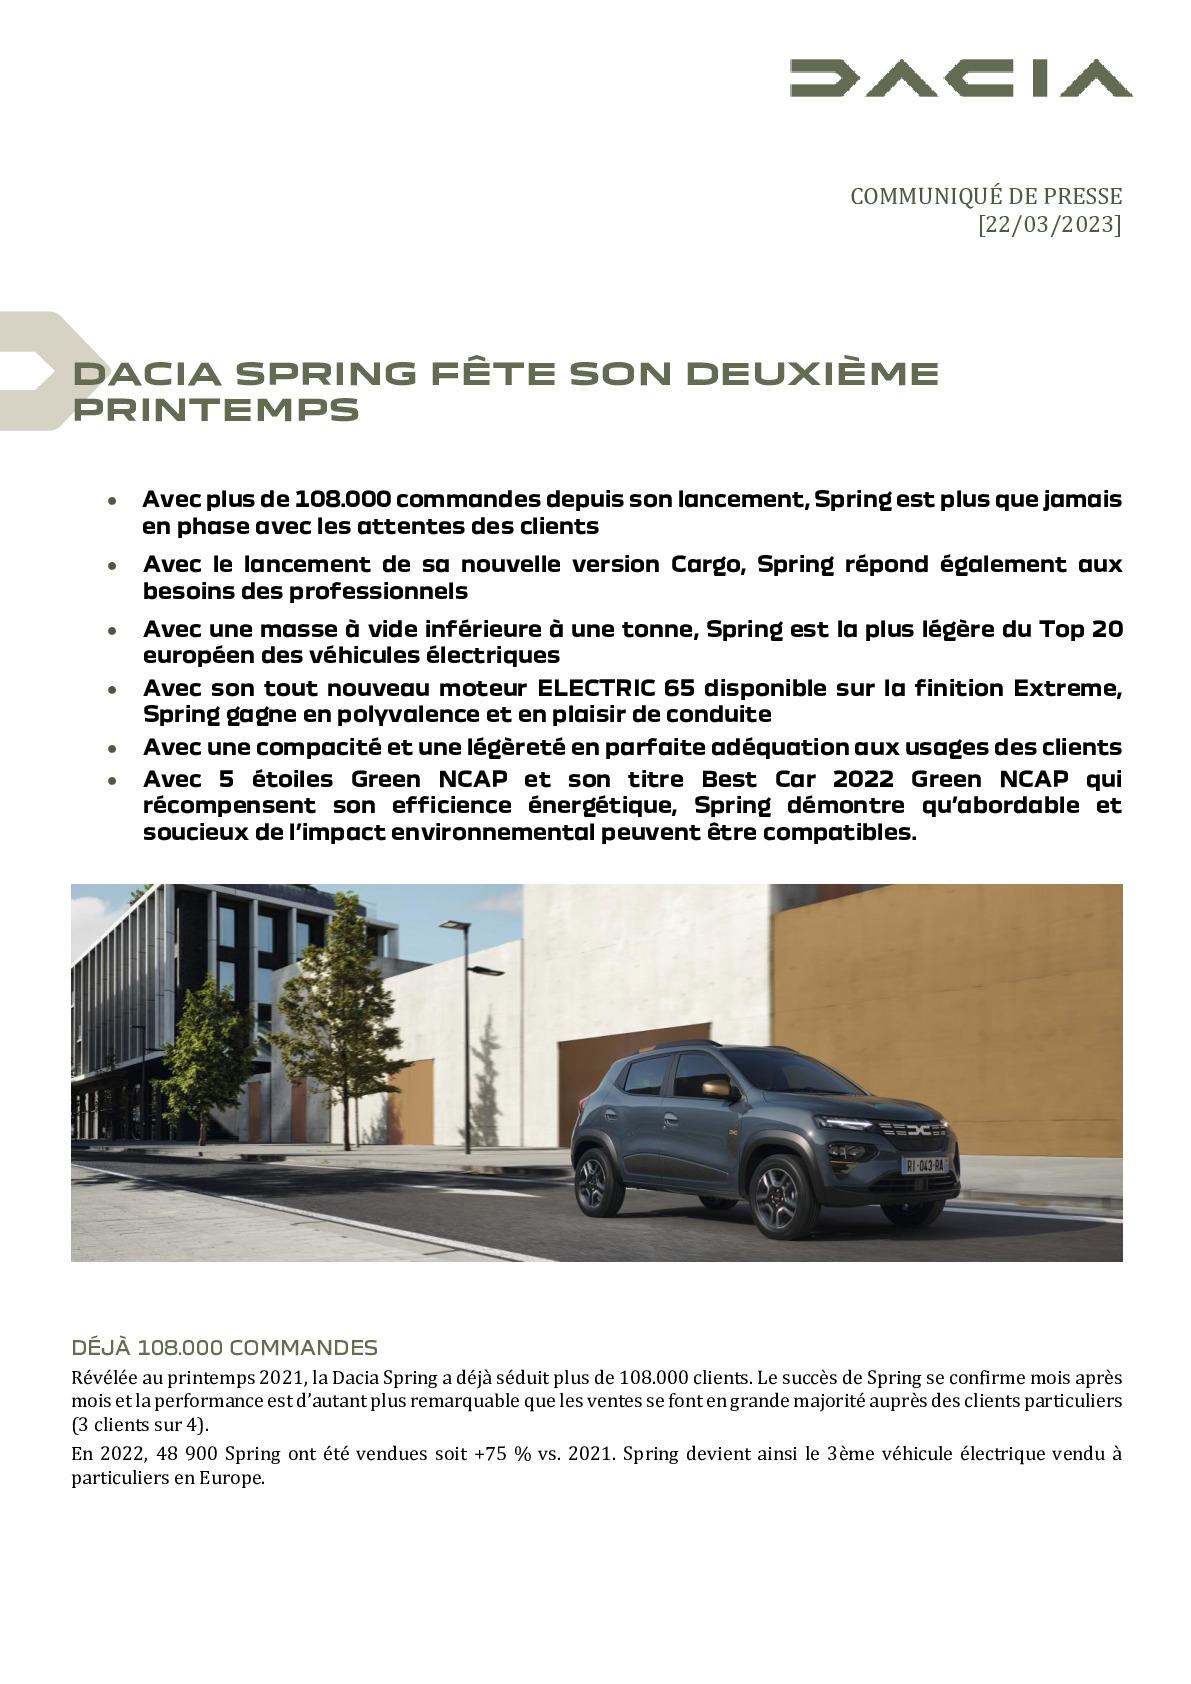 Dacia Spring fête son deuxième printemps - Site media global de Dacia